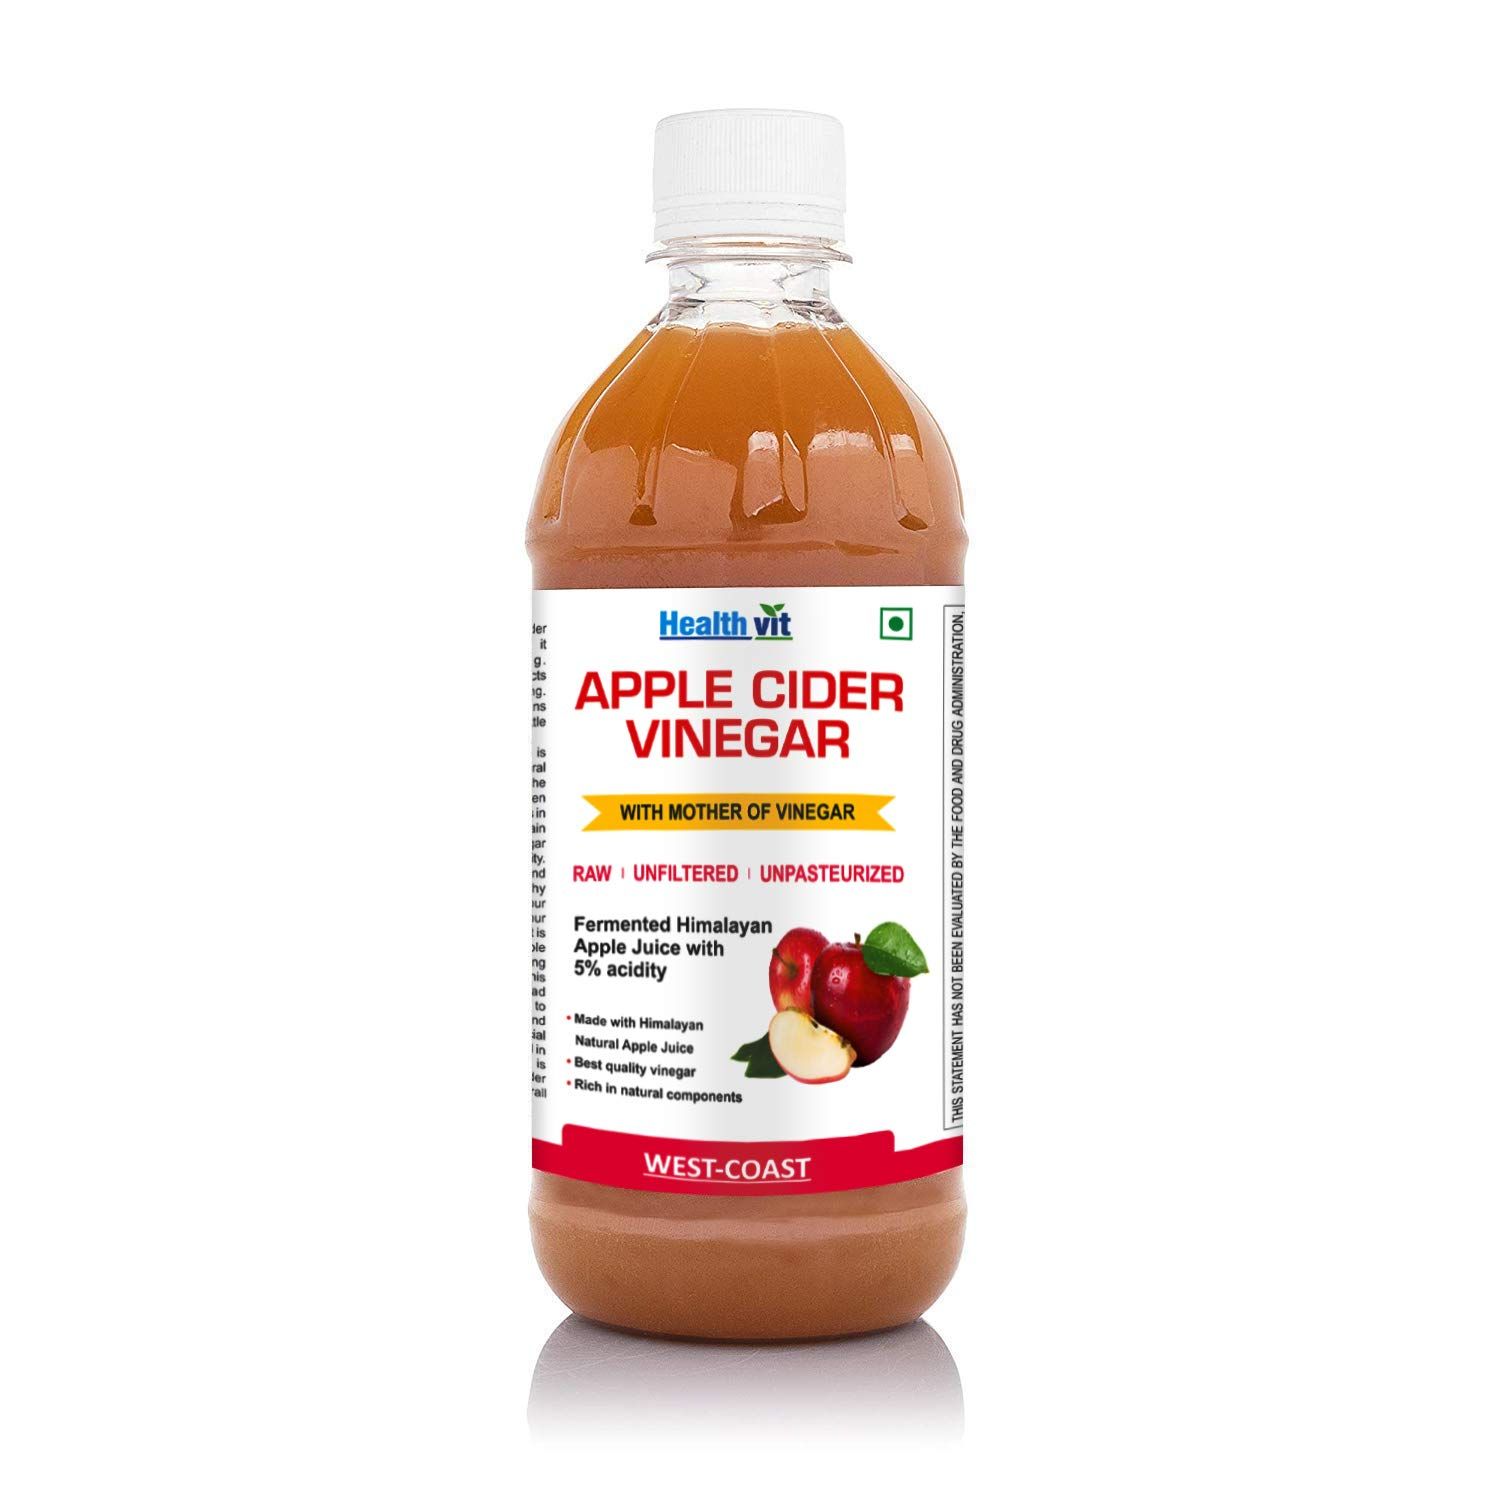 HealthVit Apple Cider Vinegar Image